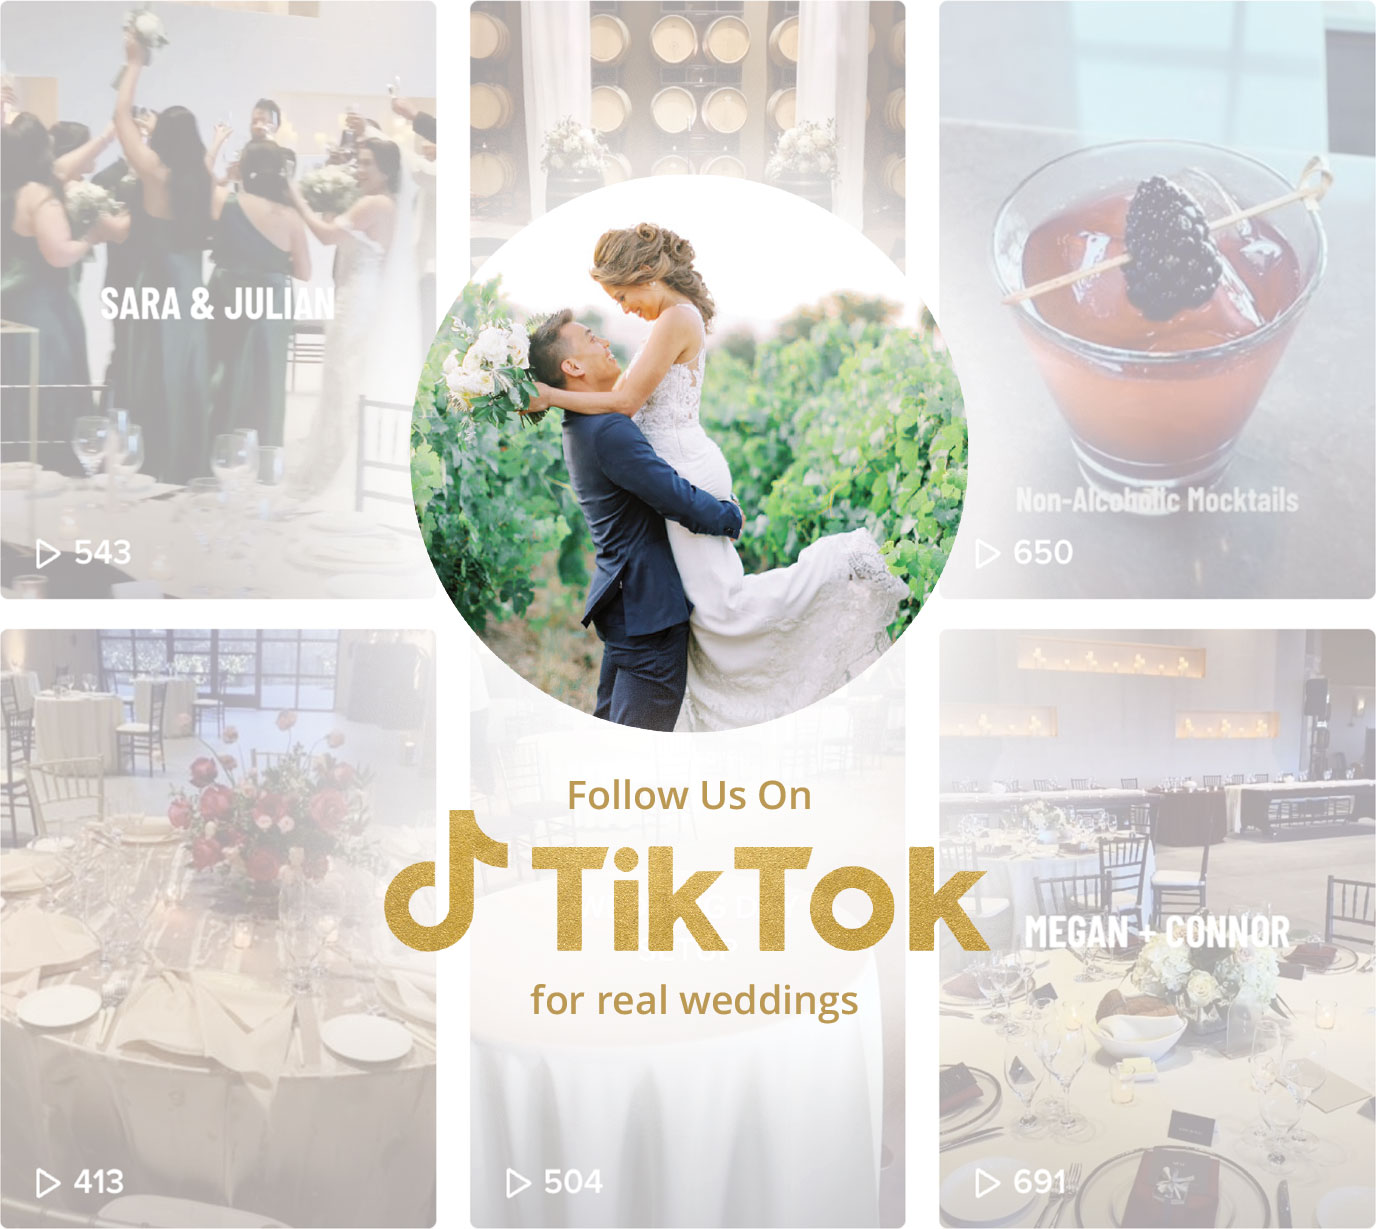 Follow Us On TikTok for real weddings